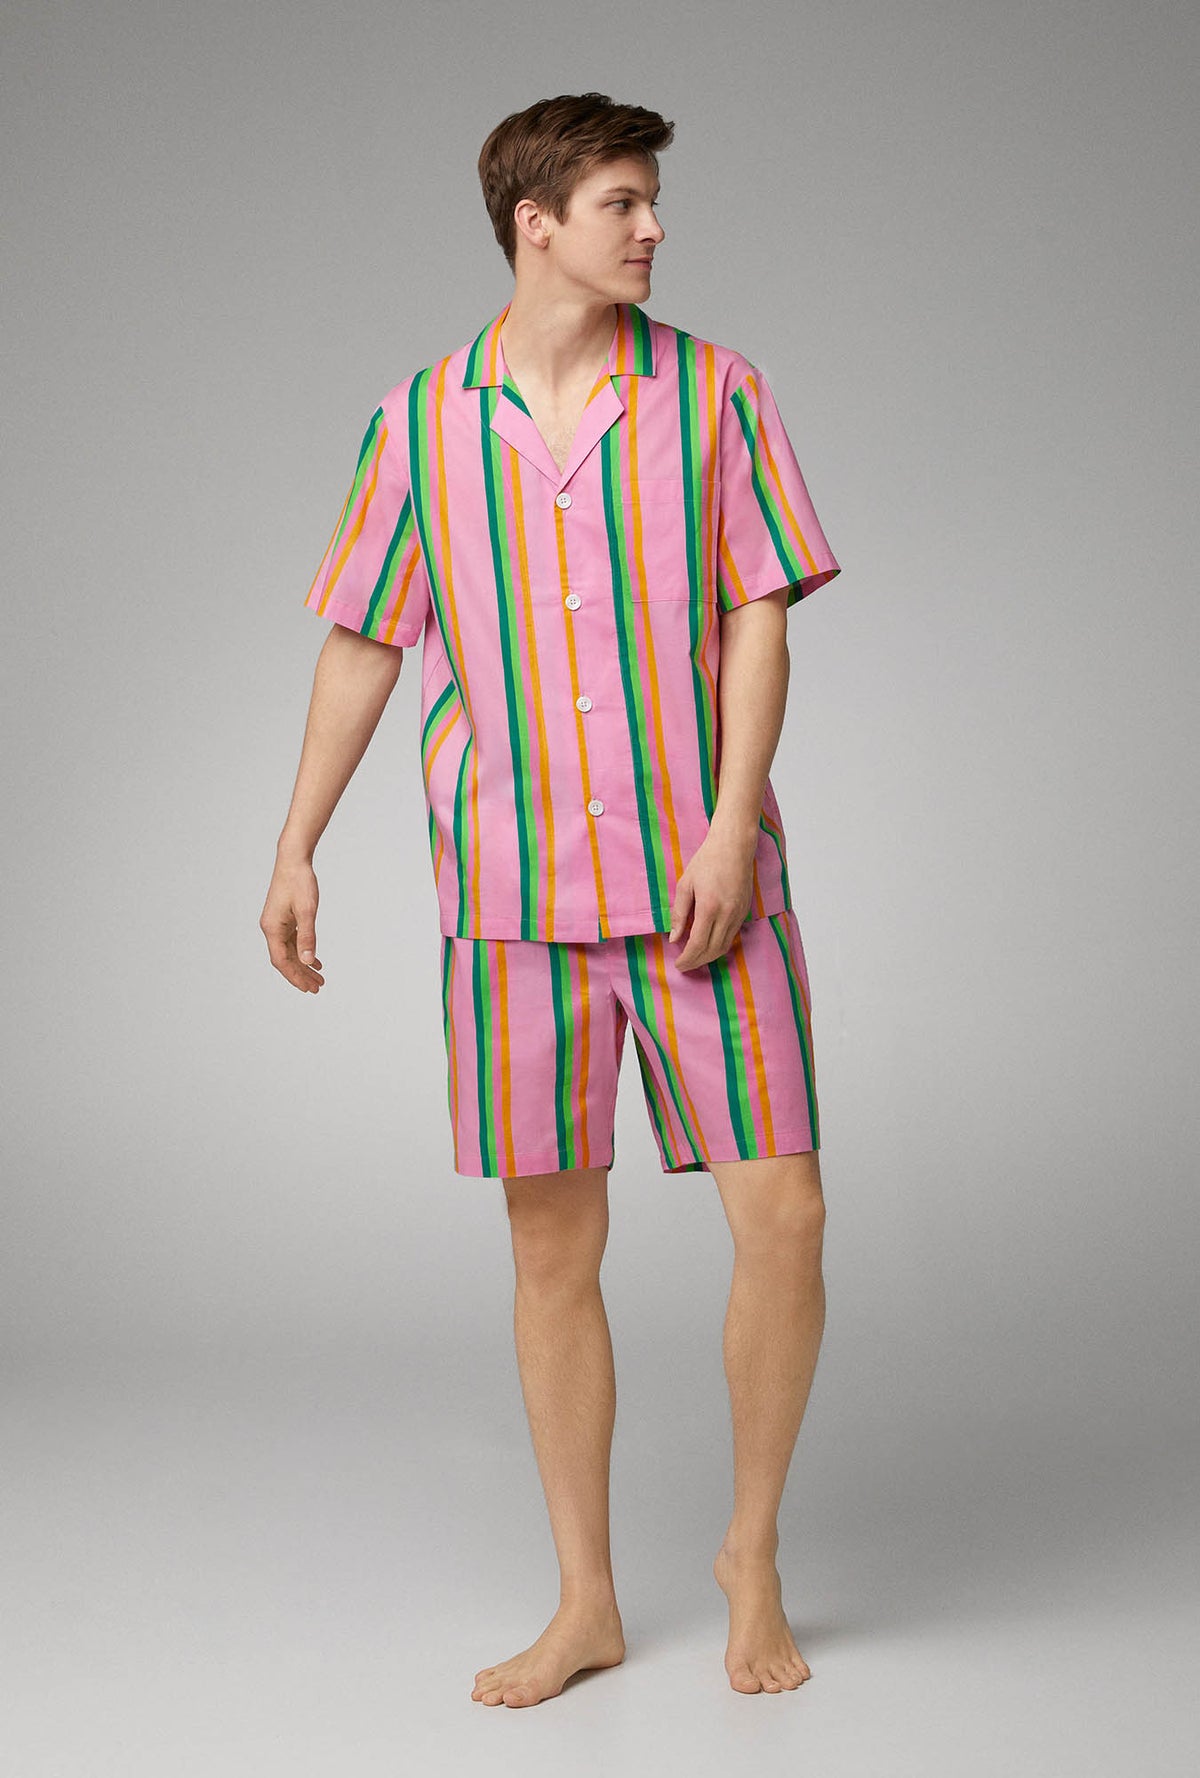 A men wearing Short Sleeve Woven Poplin Boxer PJ Set with  Pineapple Stripe print